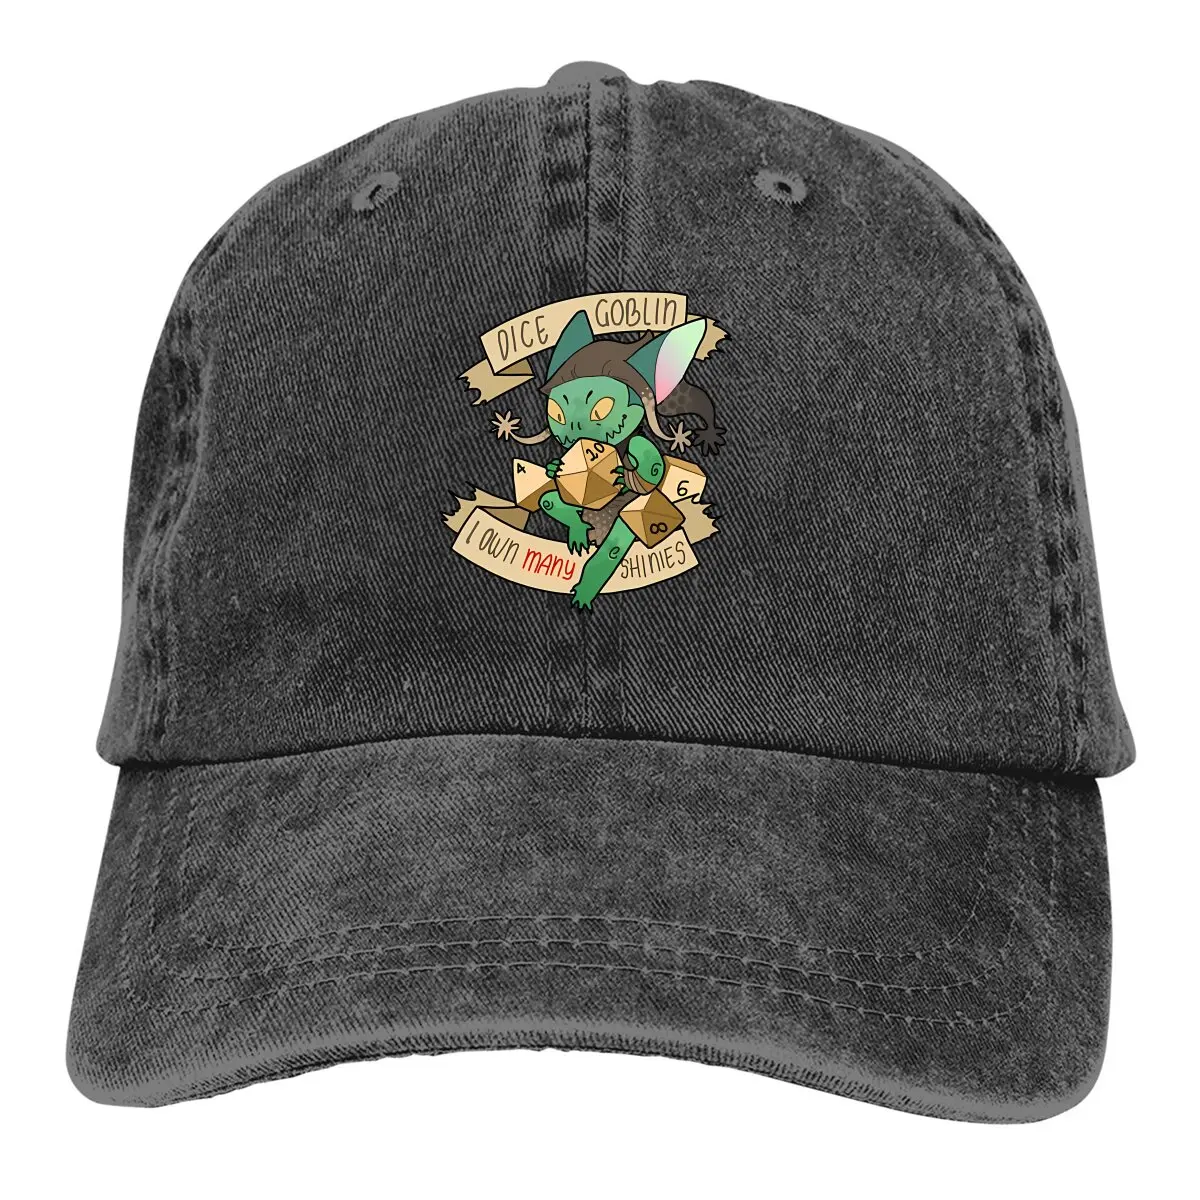 

Summer Cap Sun Visor DICE GOBLIN Hip Hop Caps DnD Game Cowboy Hat Peaked Trucker Dad Hats